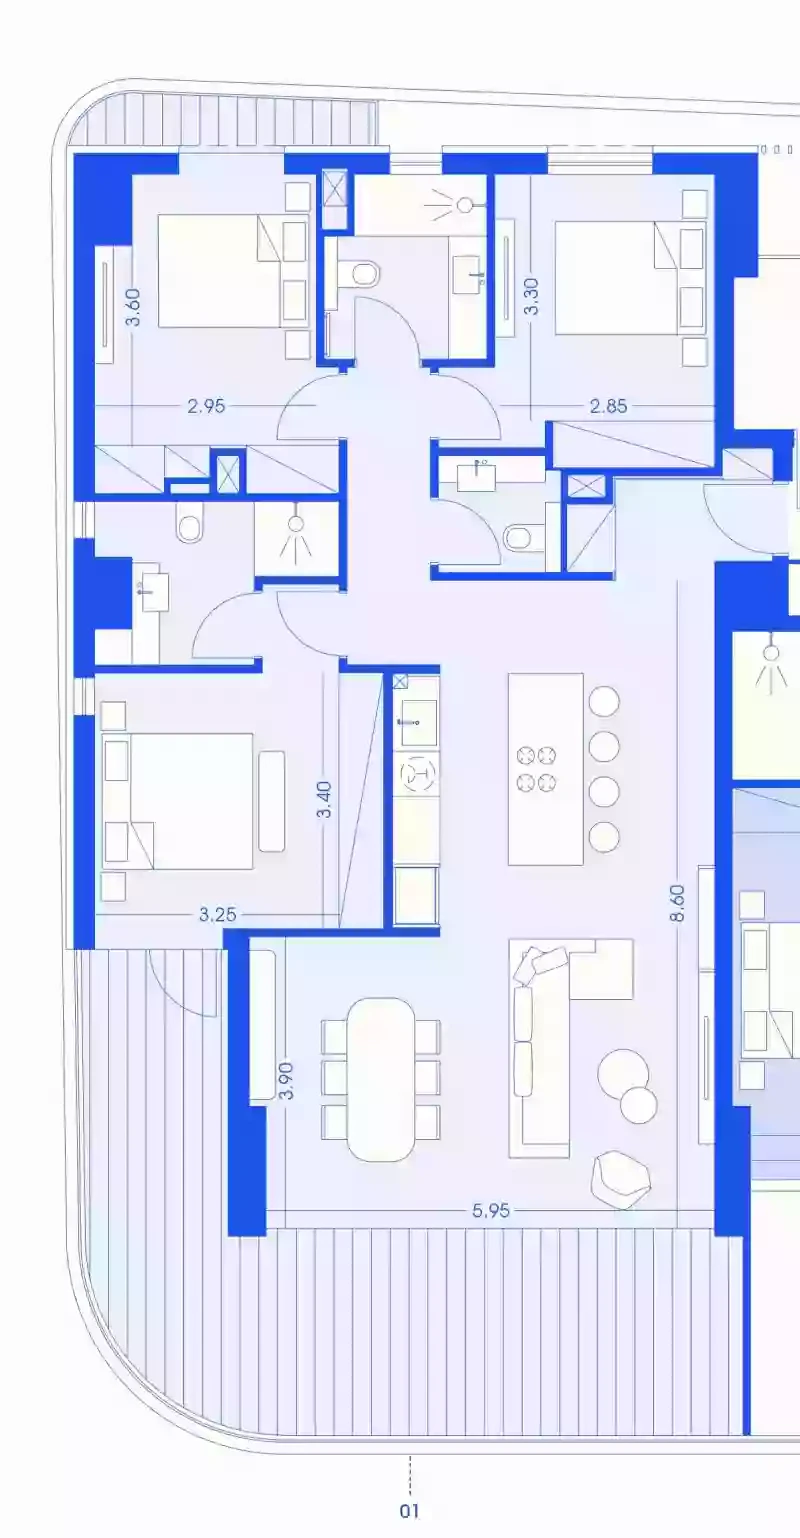 3 bedrooms, 119 sq.m., image 1